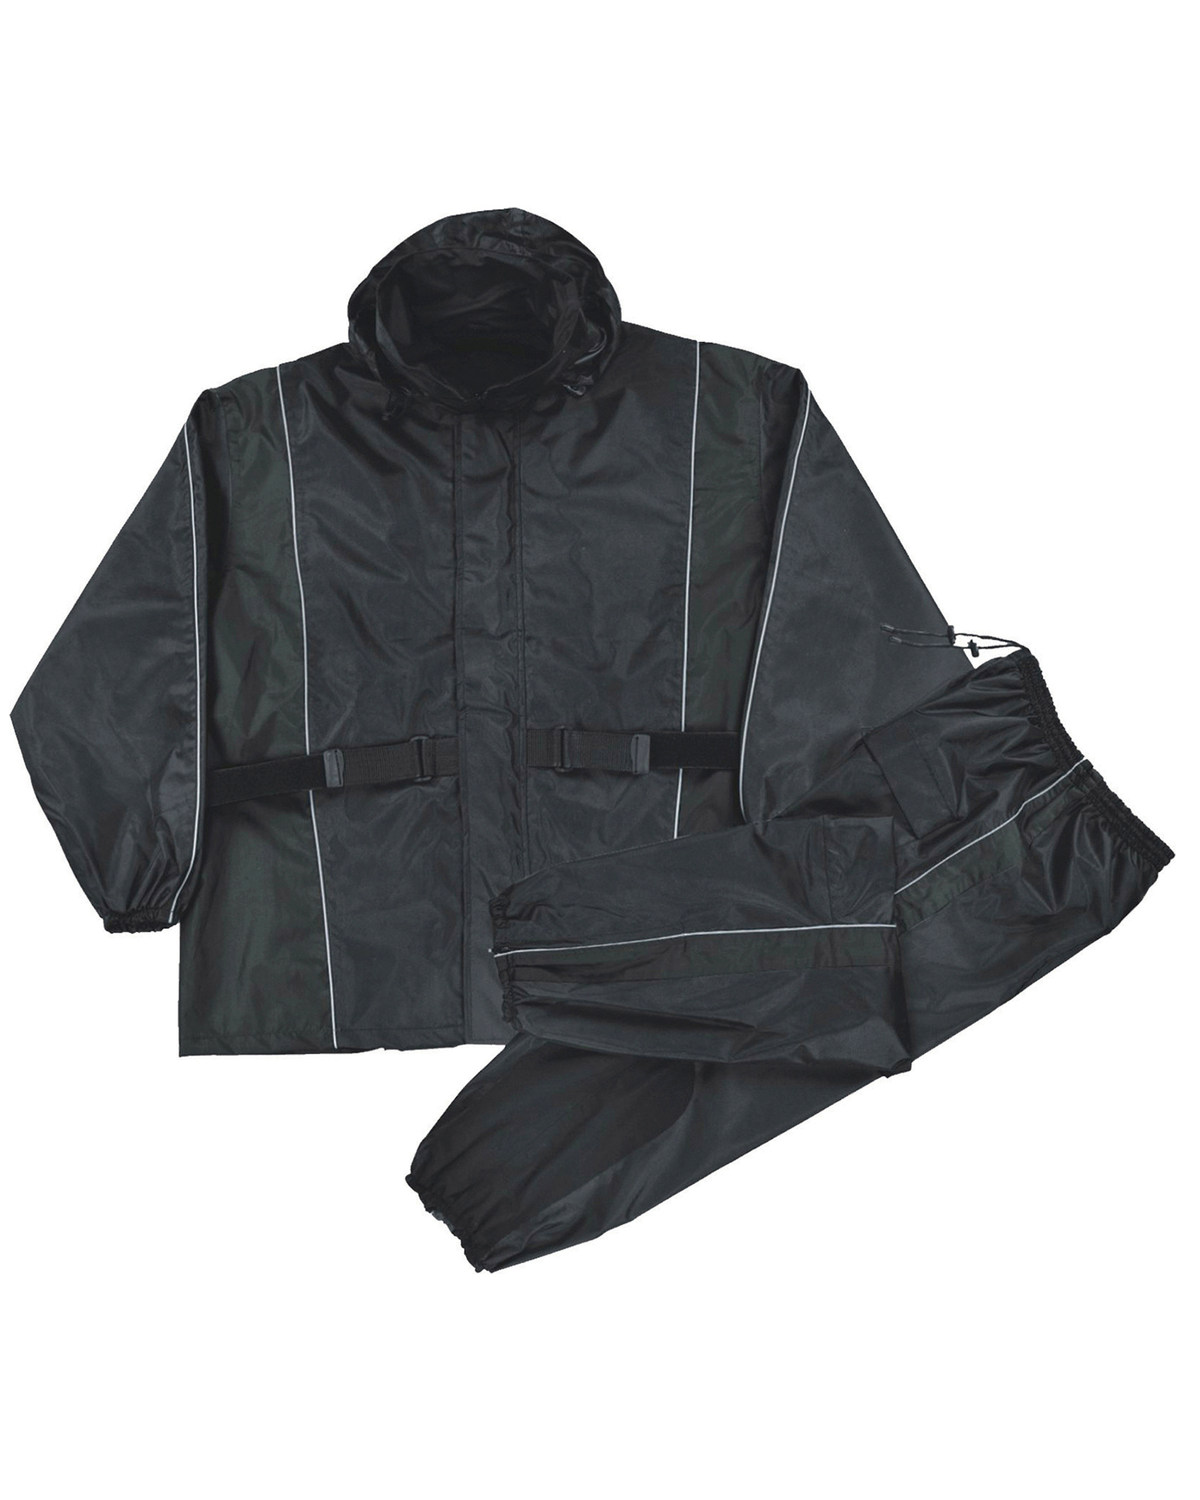 Milwaukee Leather Men's Reflective Heat Guard Waterproof Rain Suit